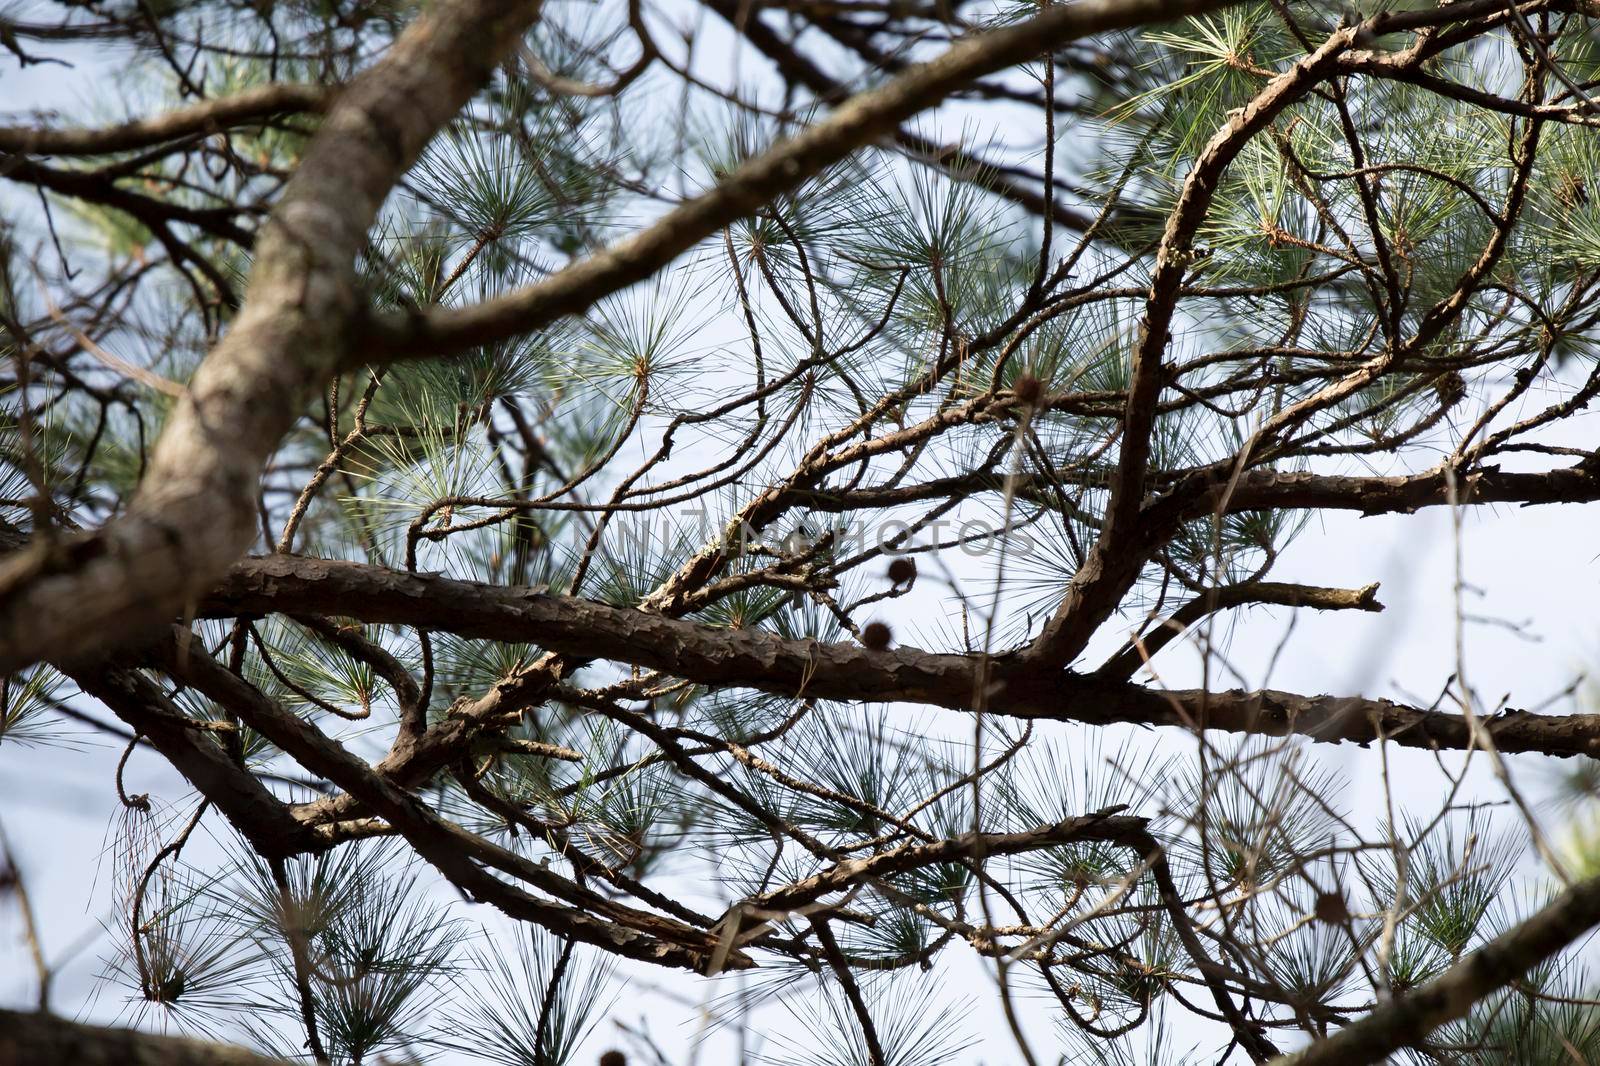 Tiny Carolina Chickadee in a Tree by tornado98